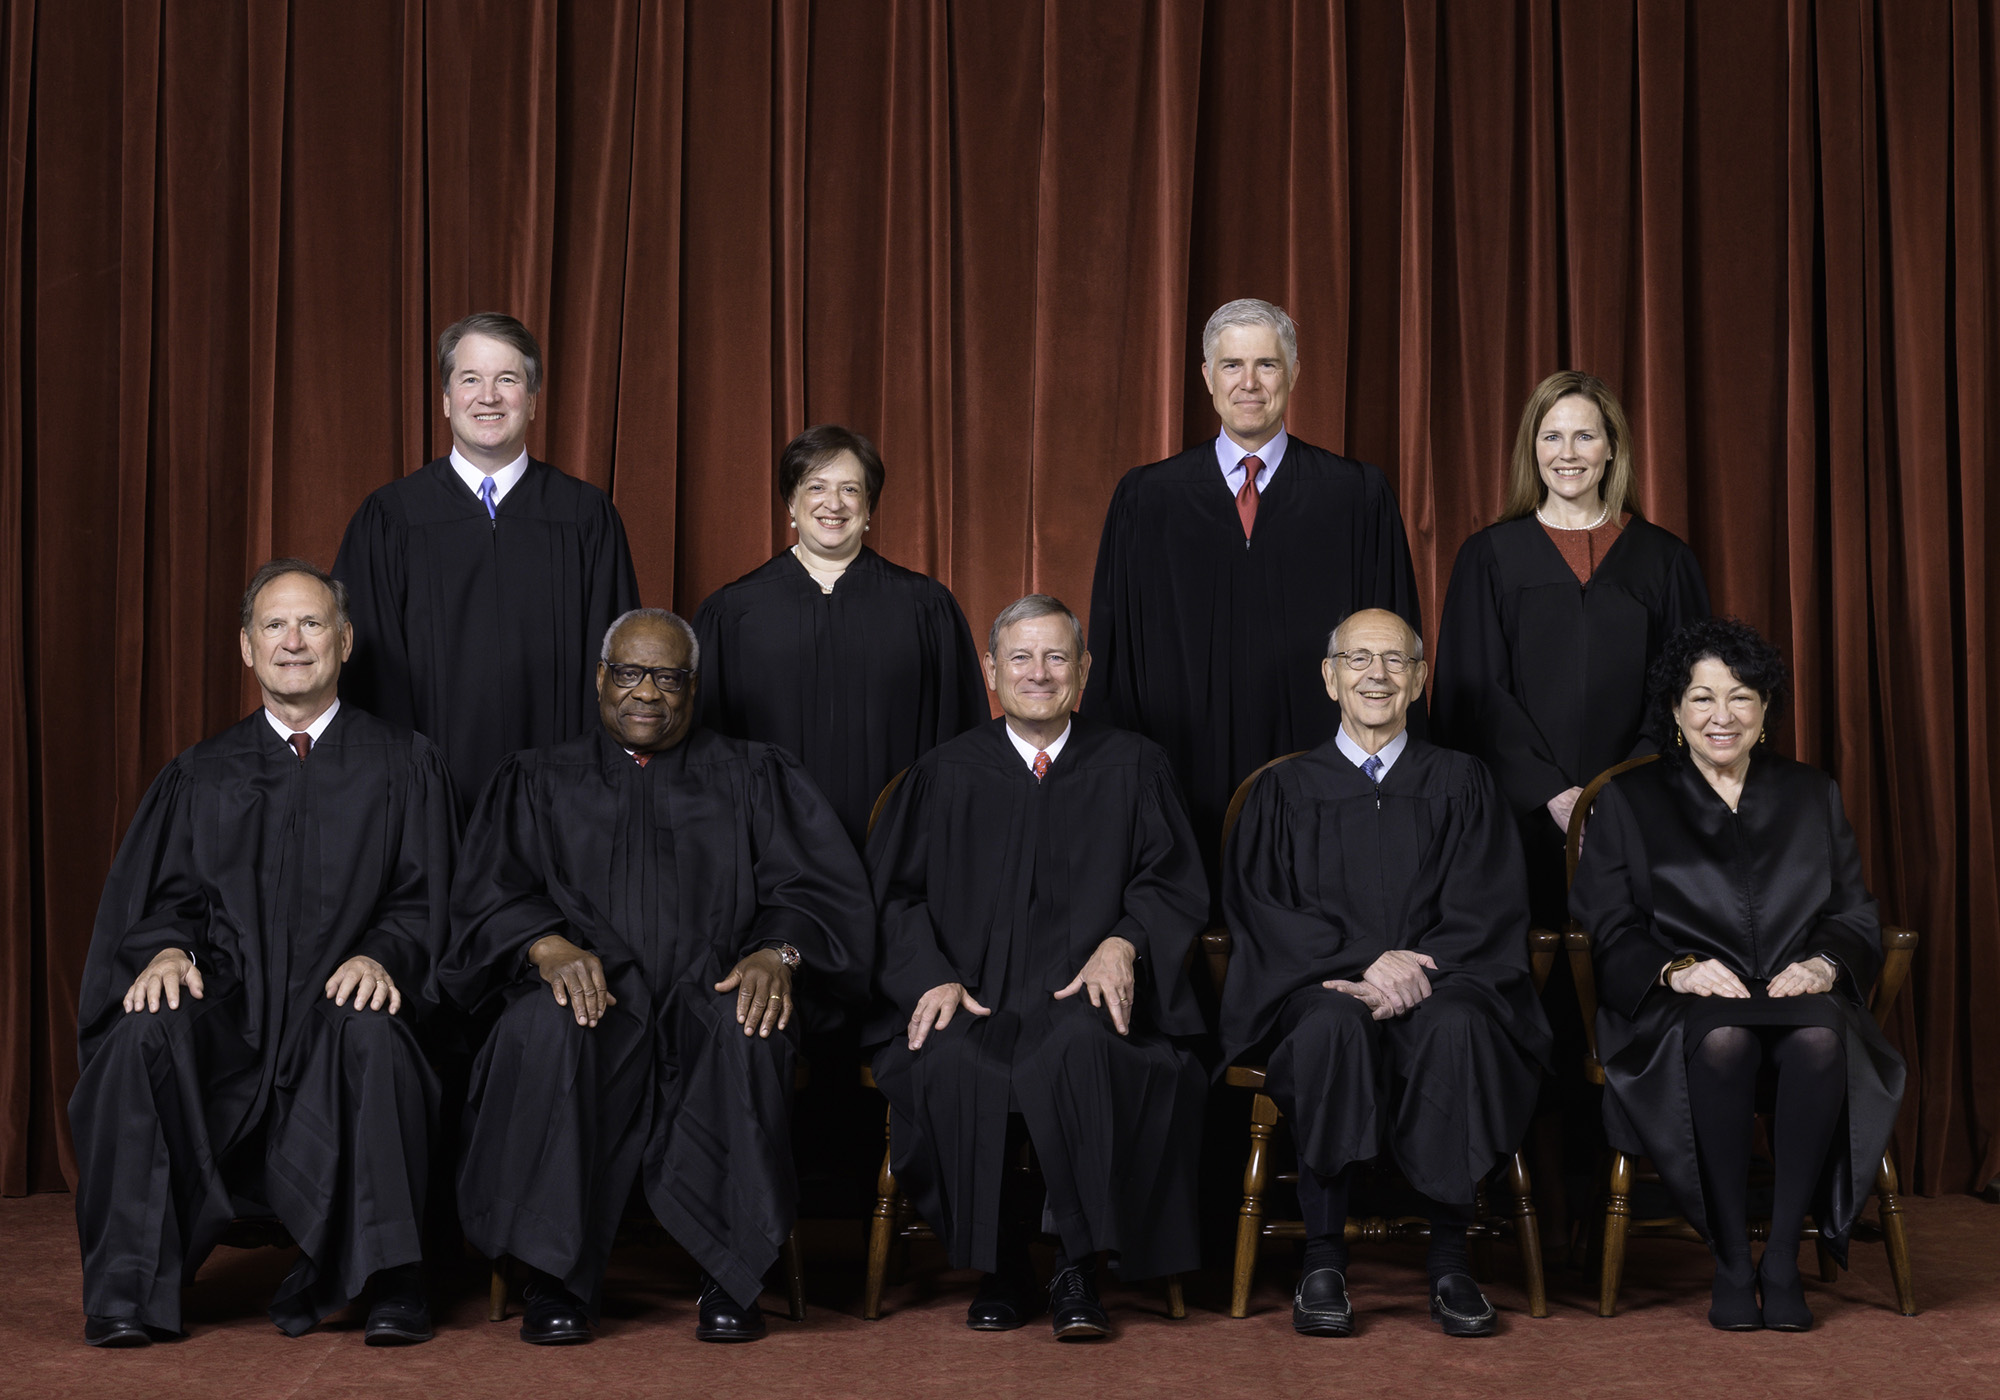 The Supreme Court: Justice Portrait 2021